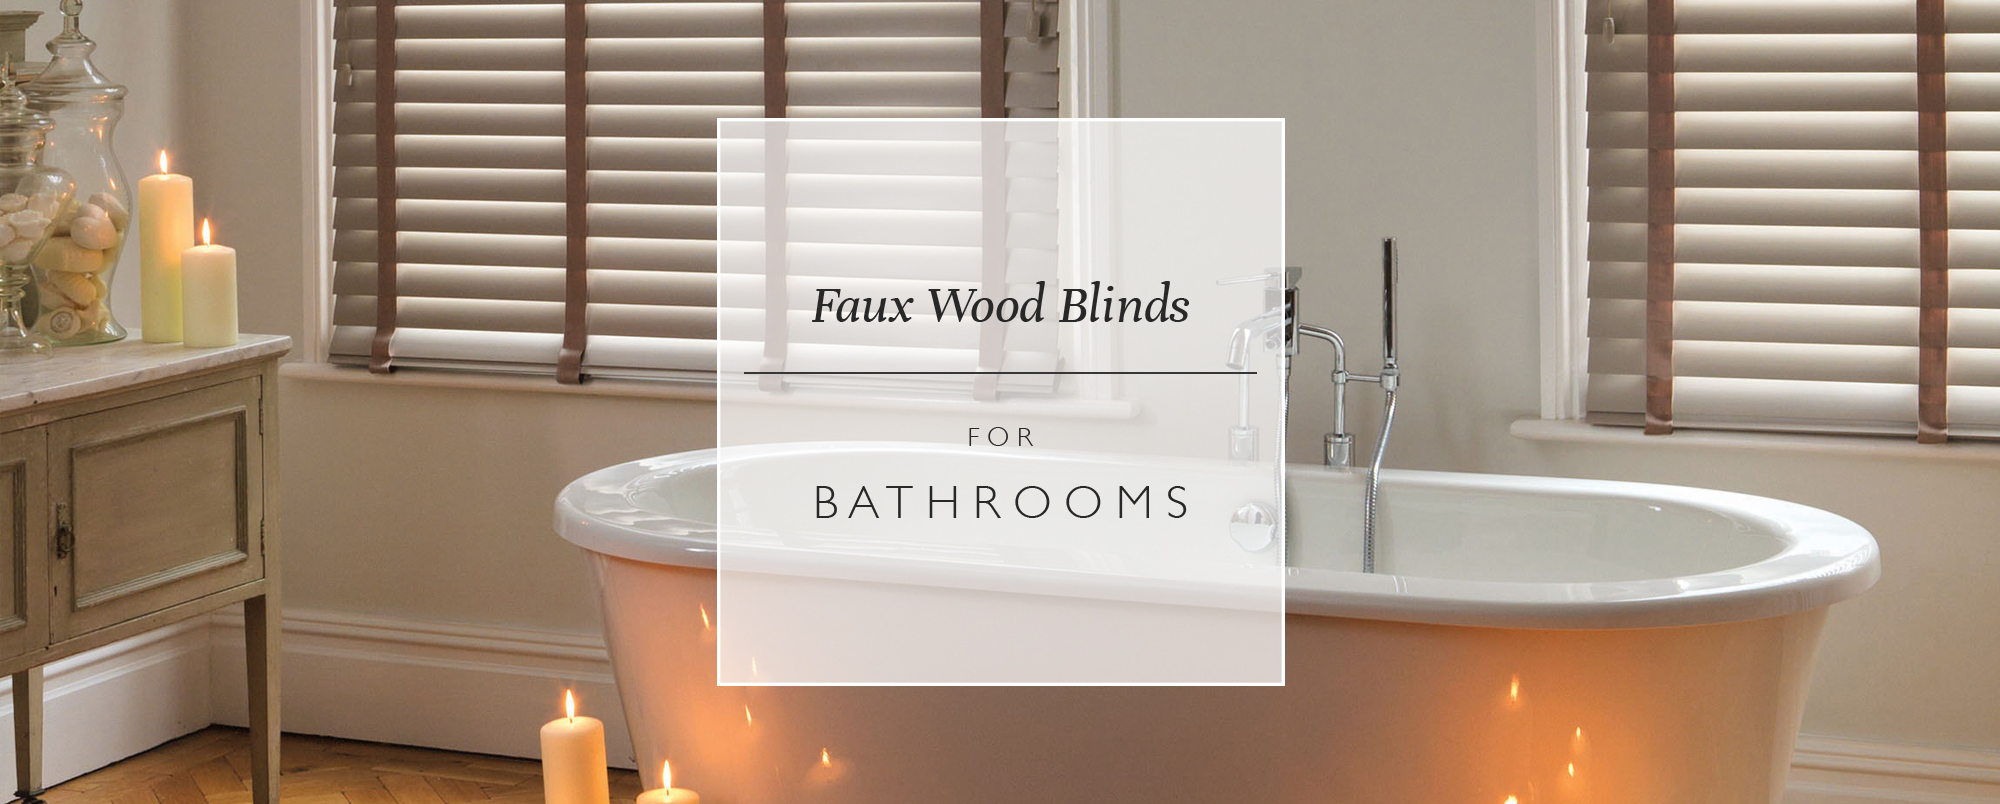 Faux Wood Blinds For Bathrooms, Bathroom Wooden Blinds Uk